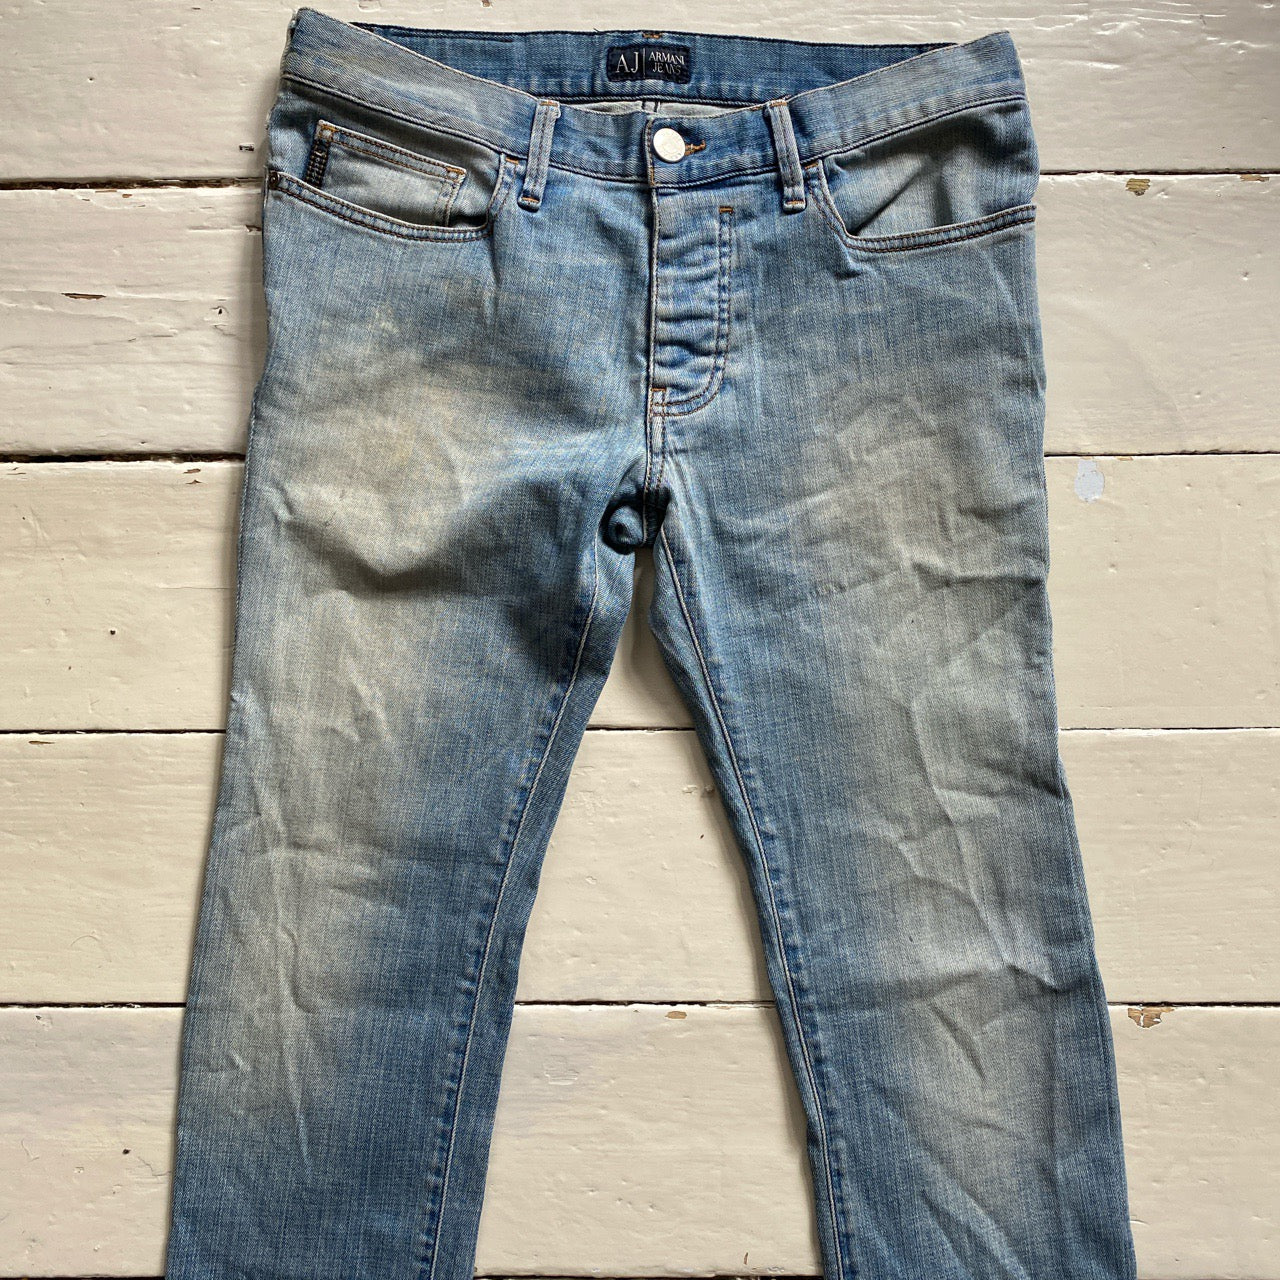 Armani Slim Fit Light Jeans (33/32)